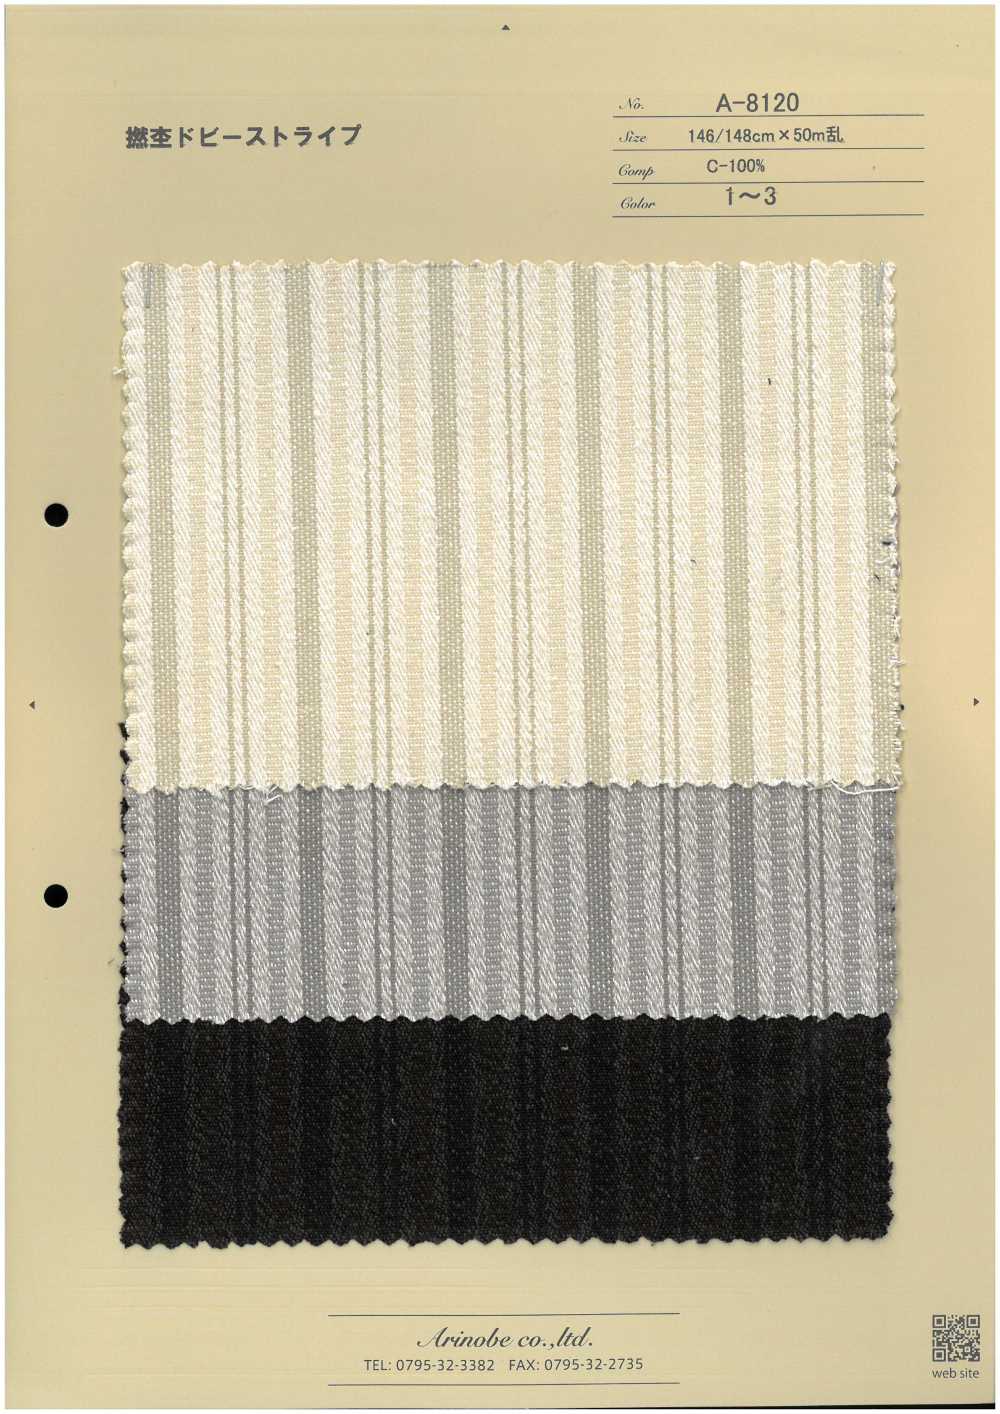 A-8120 Twisted Heather Dobby Stripe[Textilgewebe] ARINOBE CO., LTD.